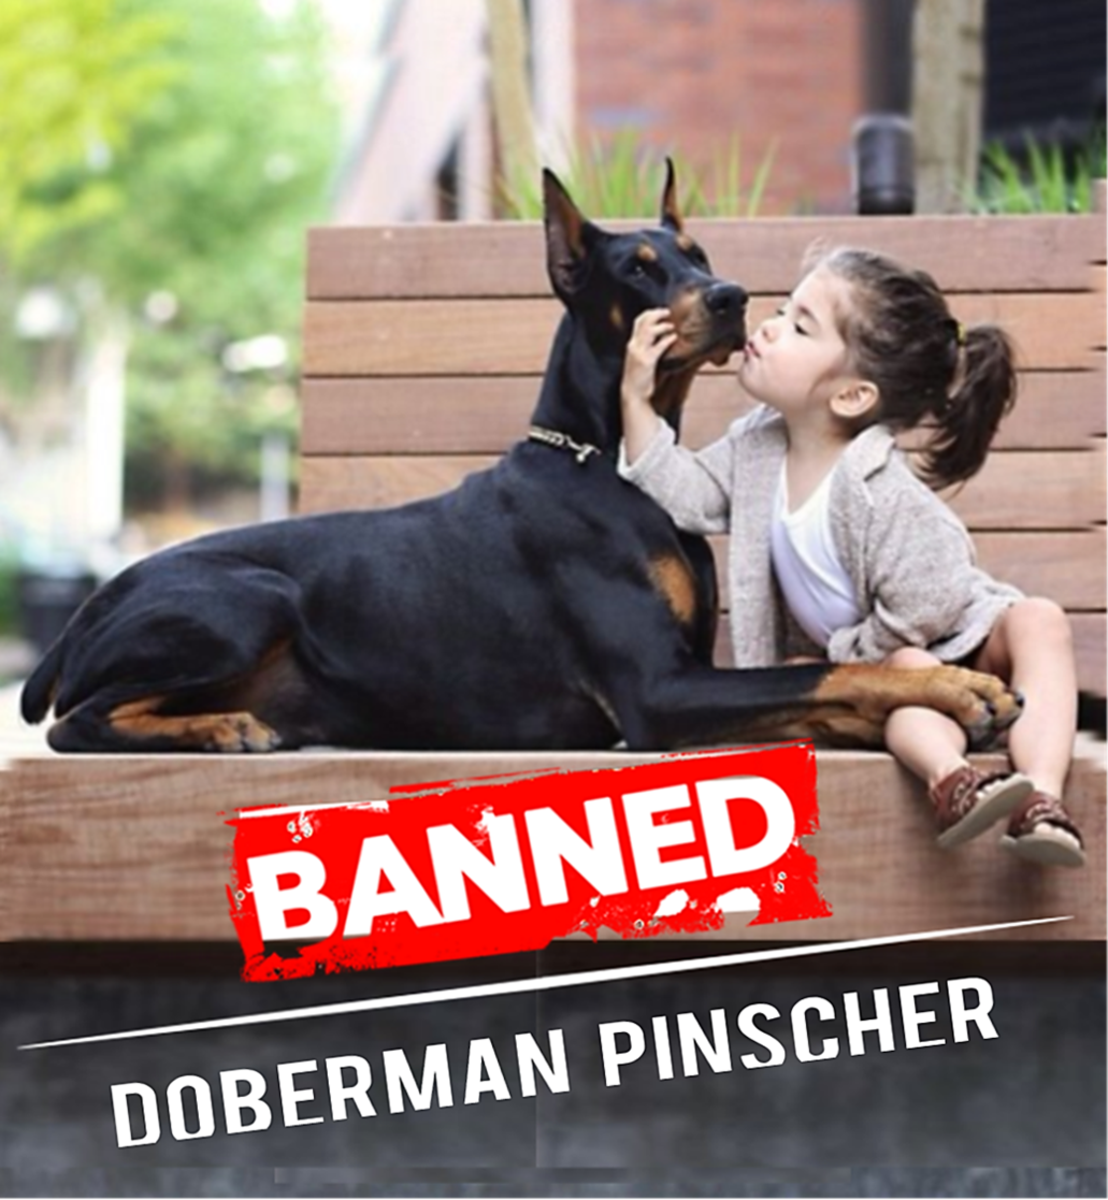 where is doberman banned?